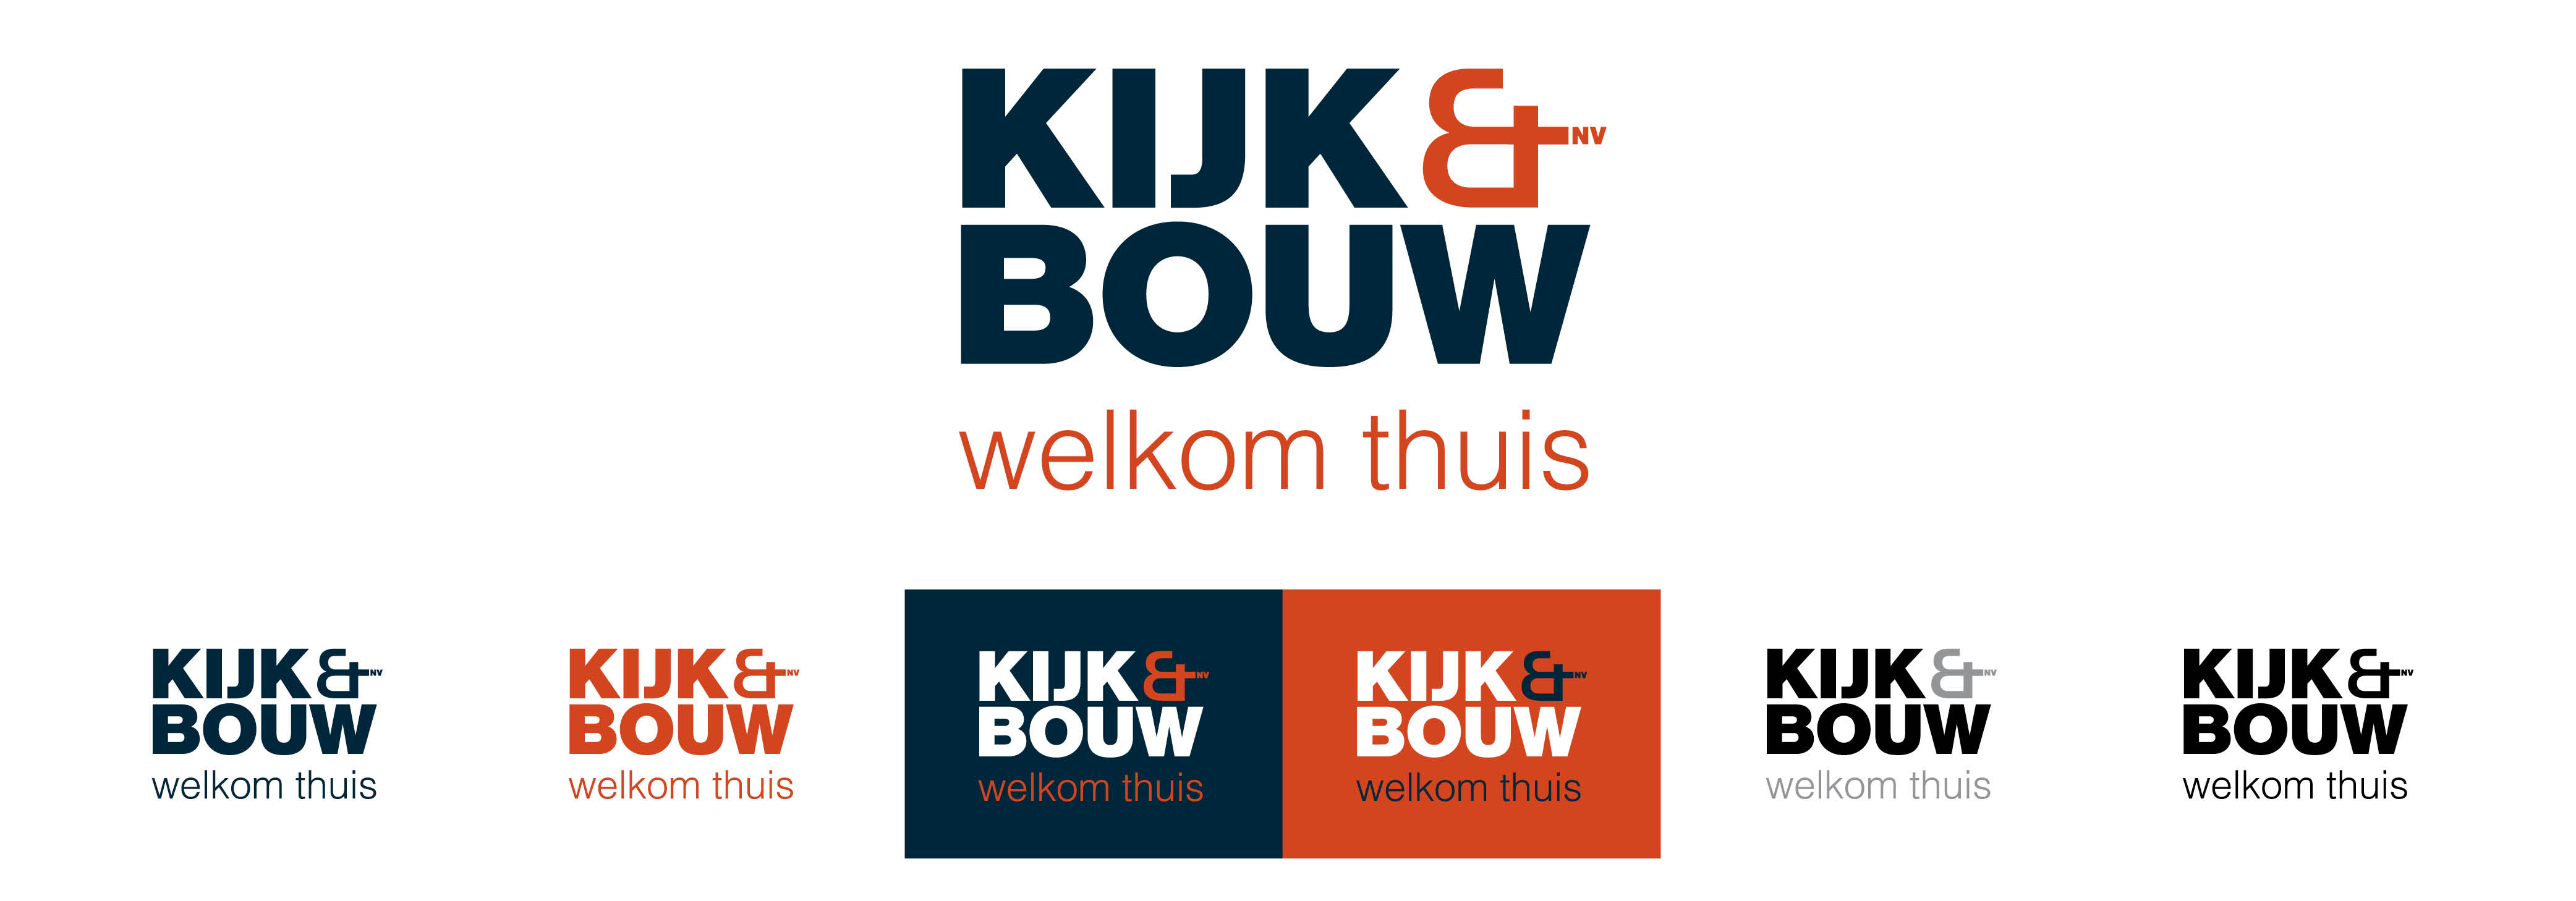 Kijk & Bouw